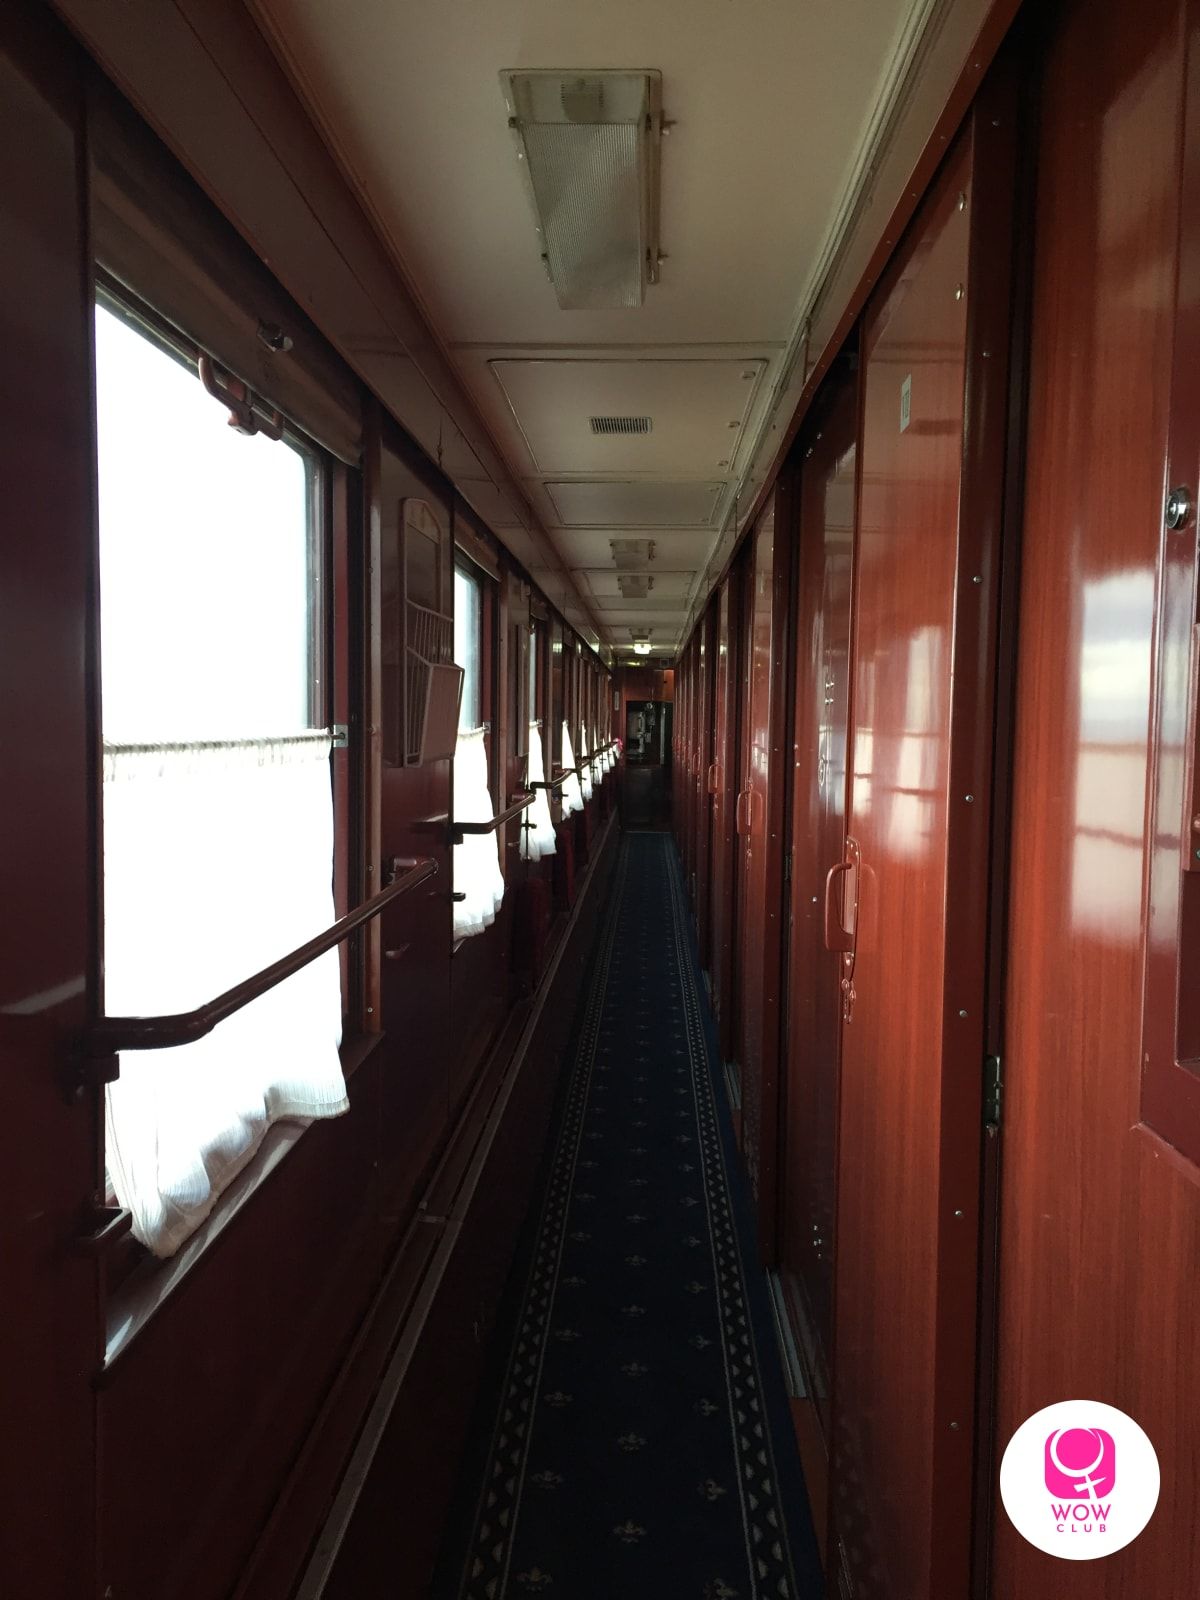 nteriors of the Trans-Siberian train compartment